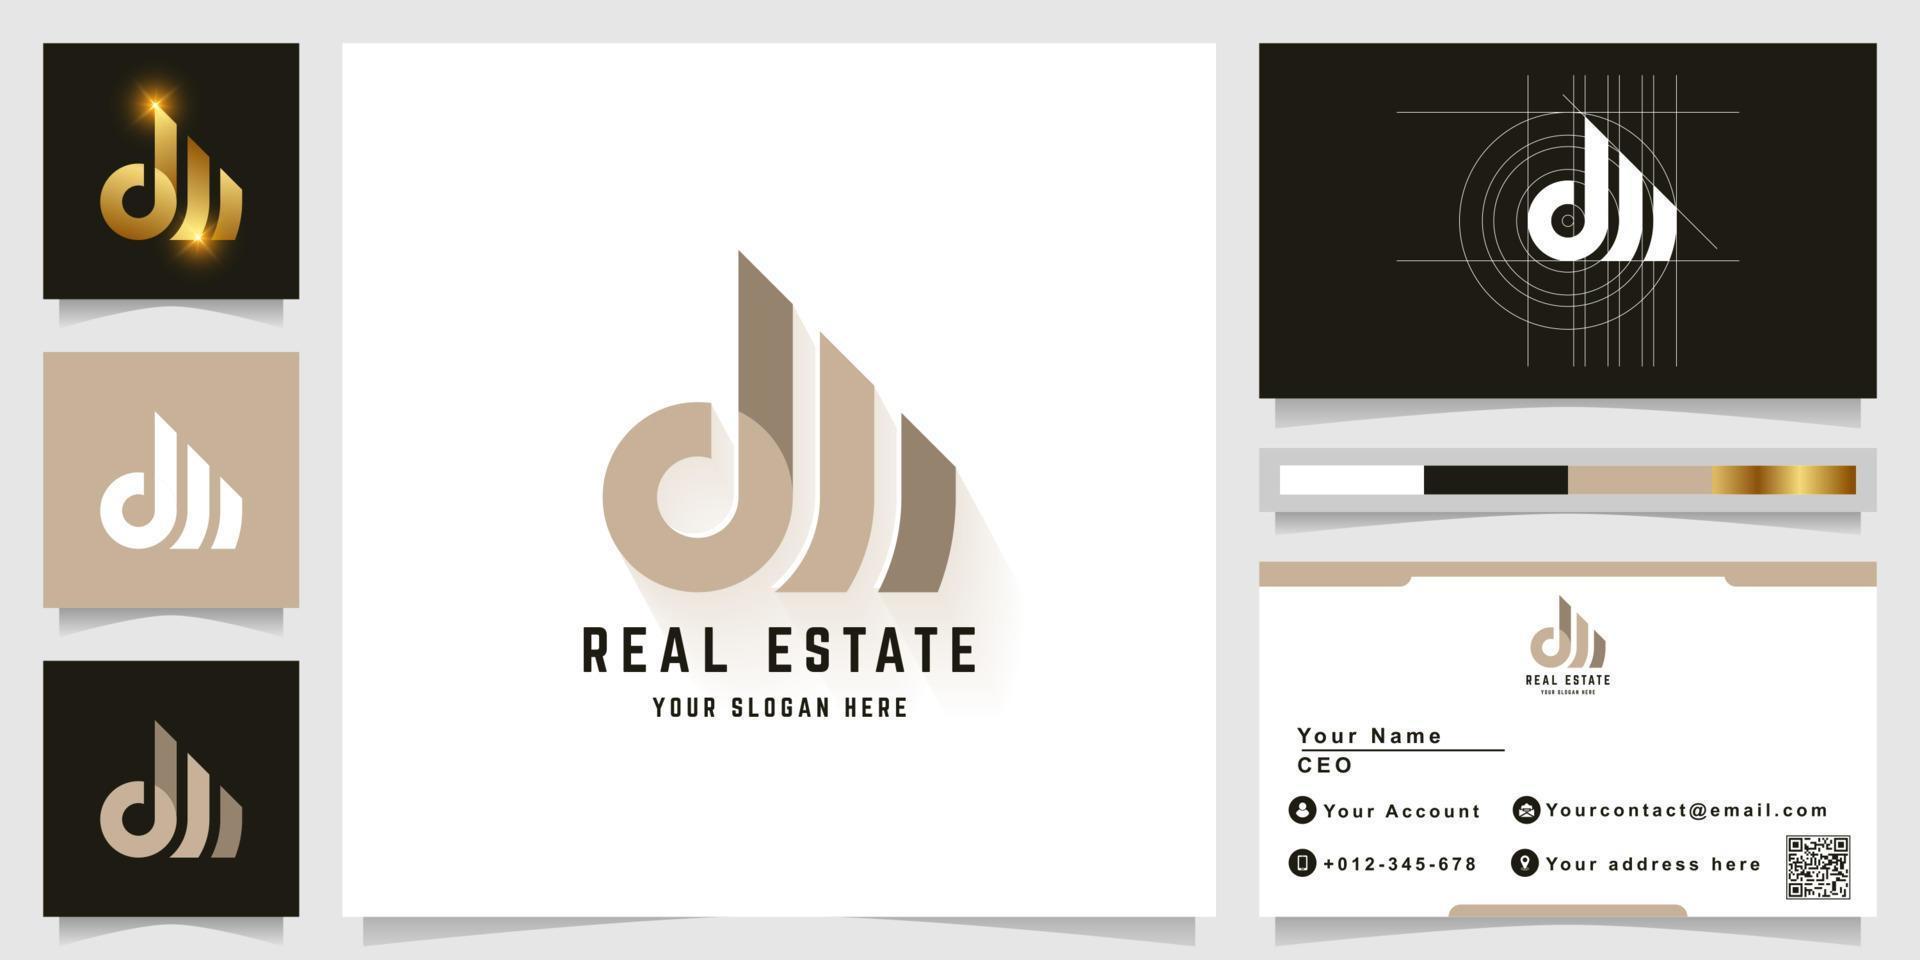 Letter dW, dM or realestate monogram logo with business card design vector